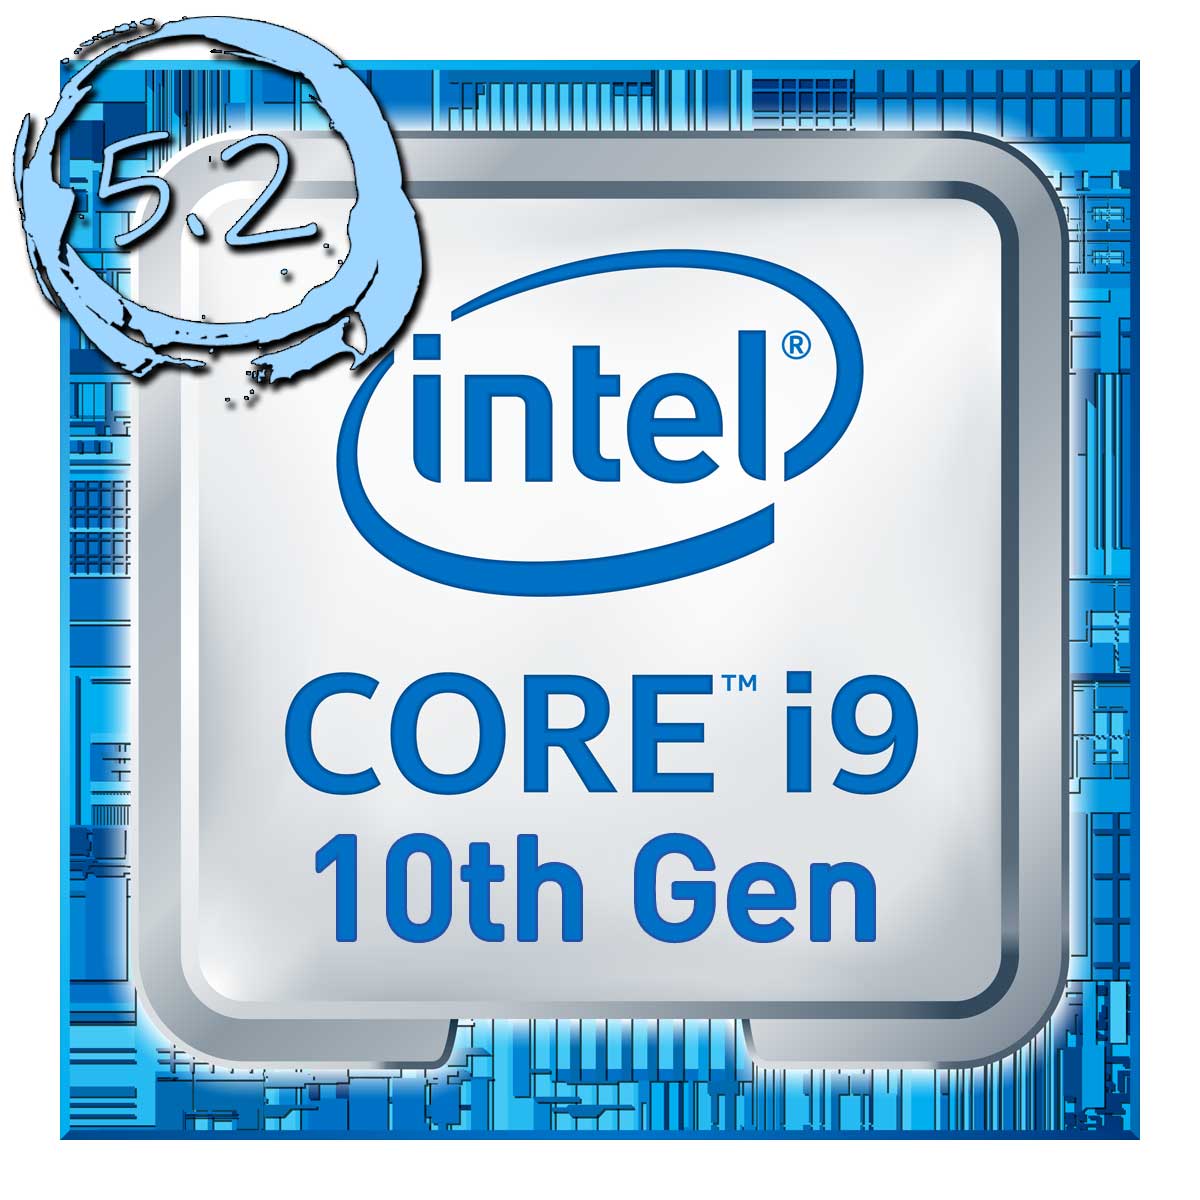 Intel - Intel Core i9-10900K Speed Binned 5.2GHz (Comet Lake) Socket LGA1151 Proces